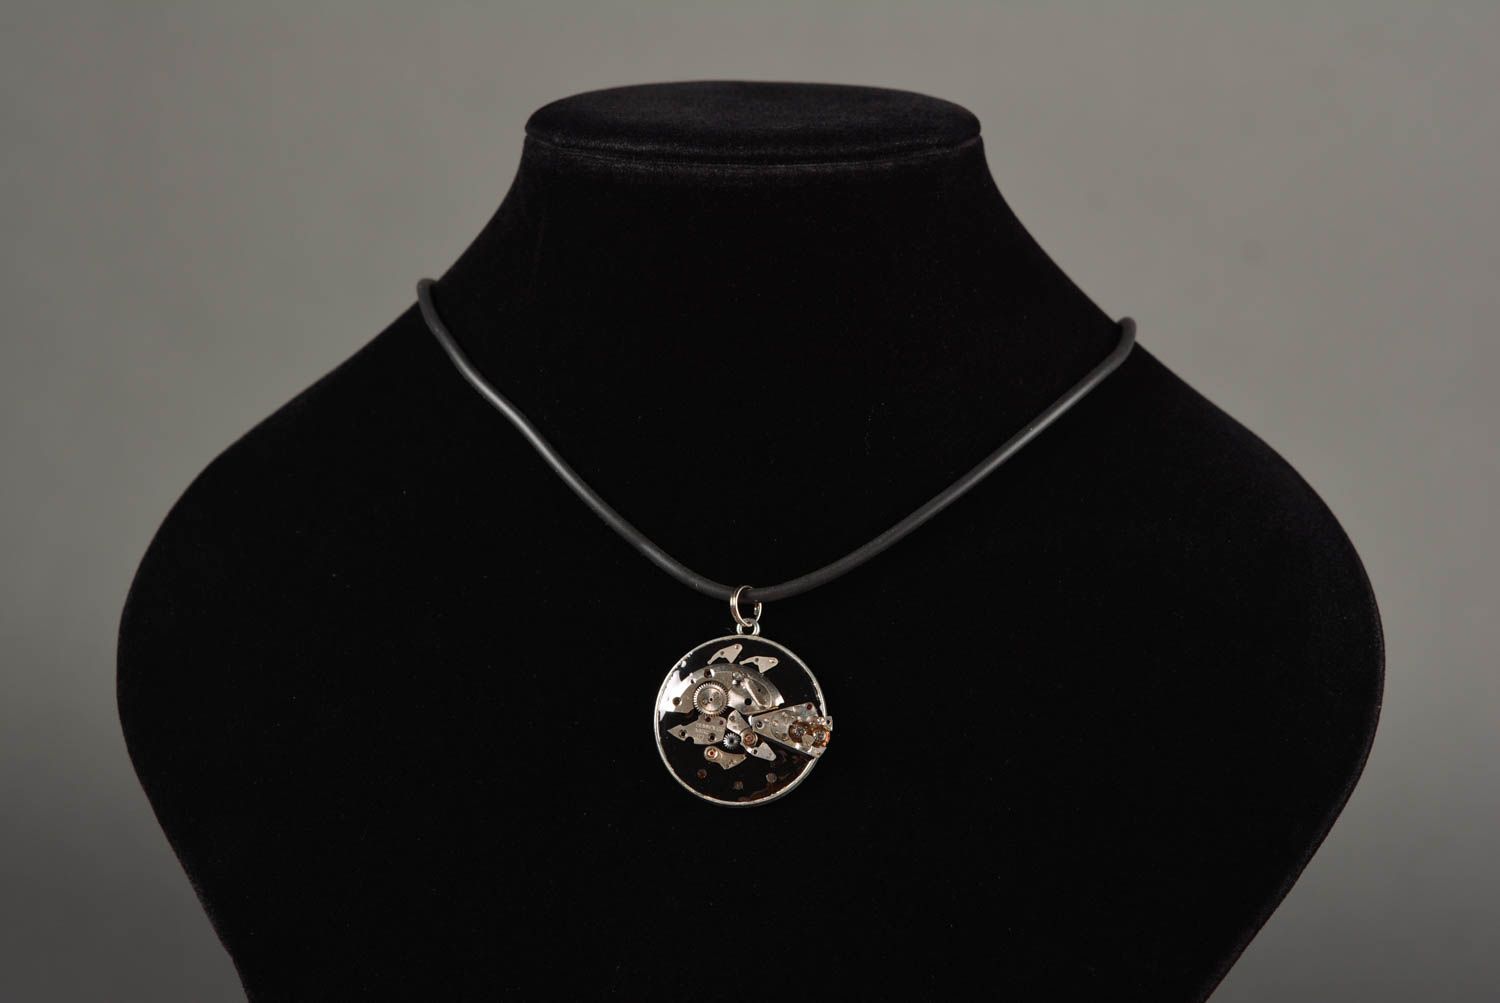 Unusual handmade metal pendant stylish neck accessories for girls gift ideas photo 2